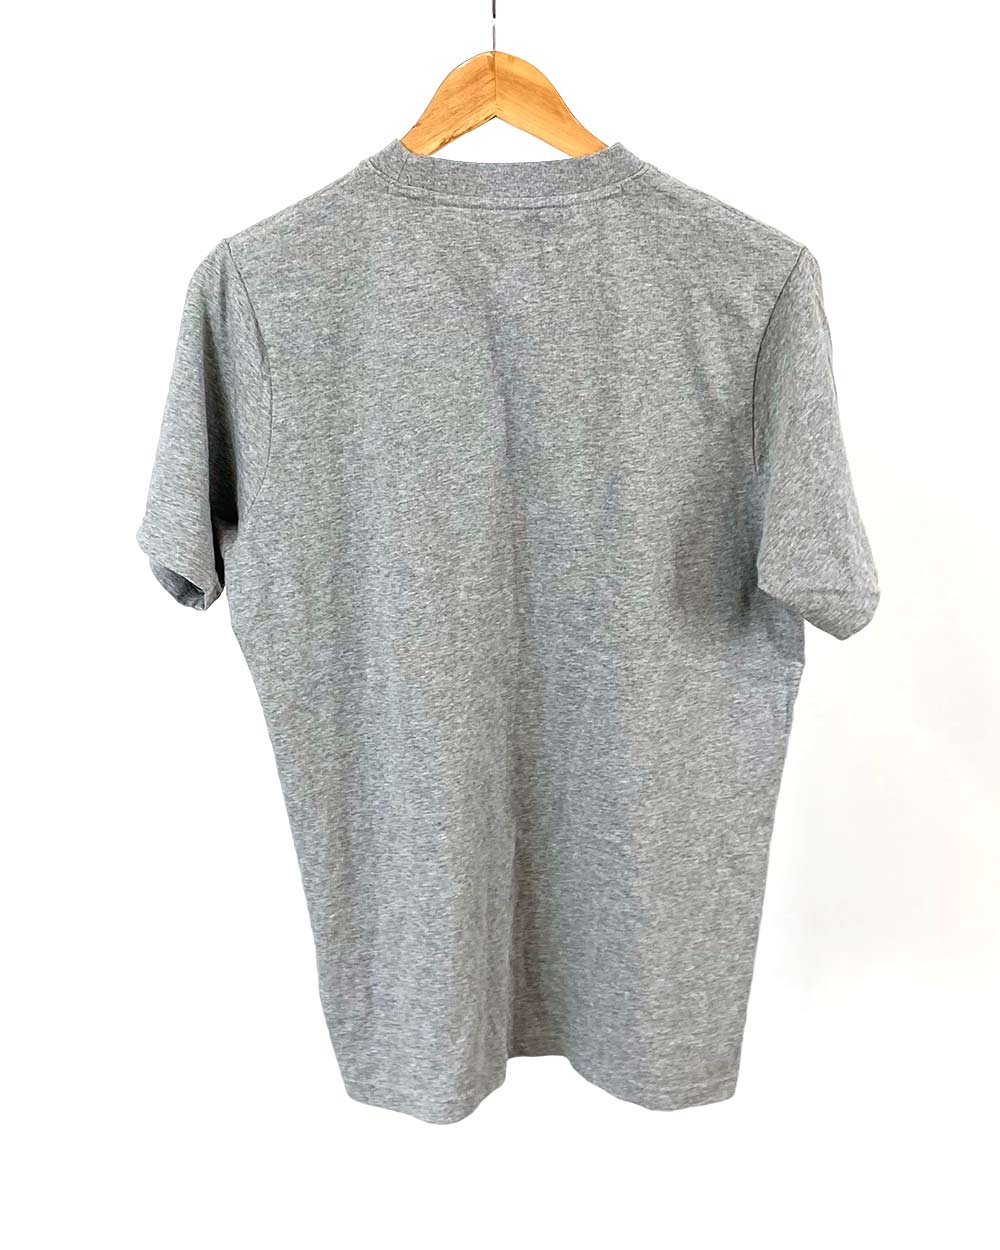 Dickies T-Shirt Large Grey Large